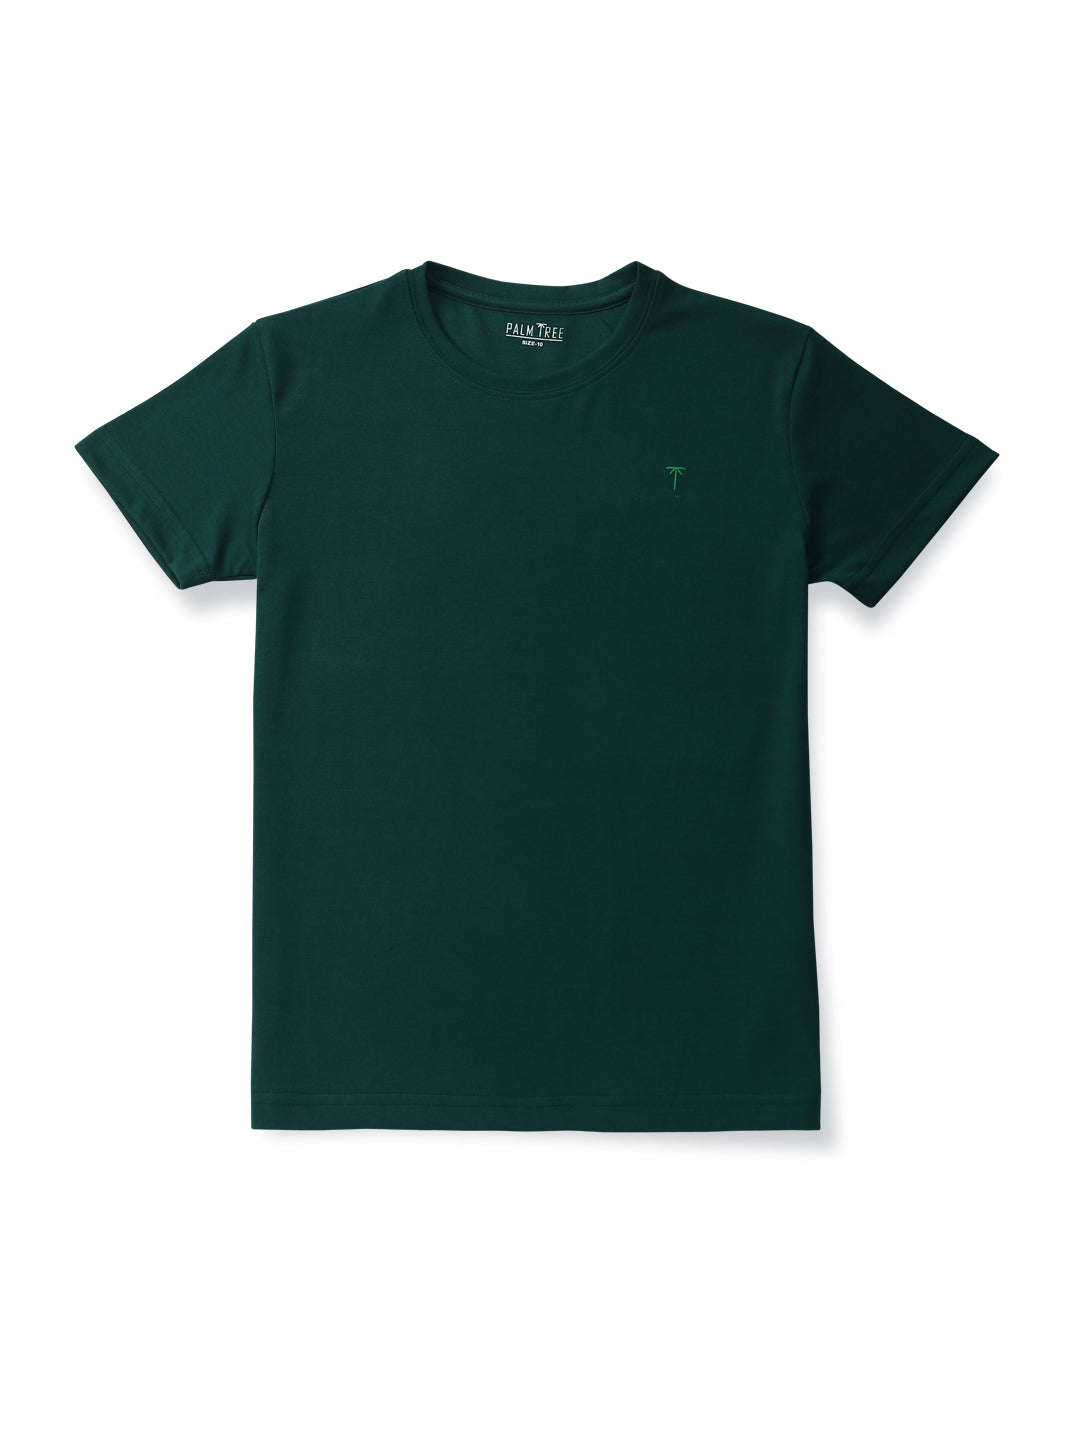 Boys Green Solid Cotton T-Shirt